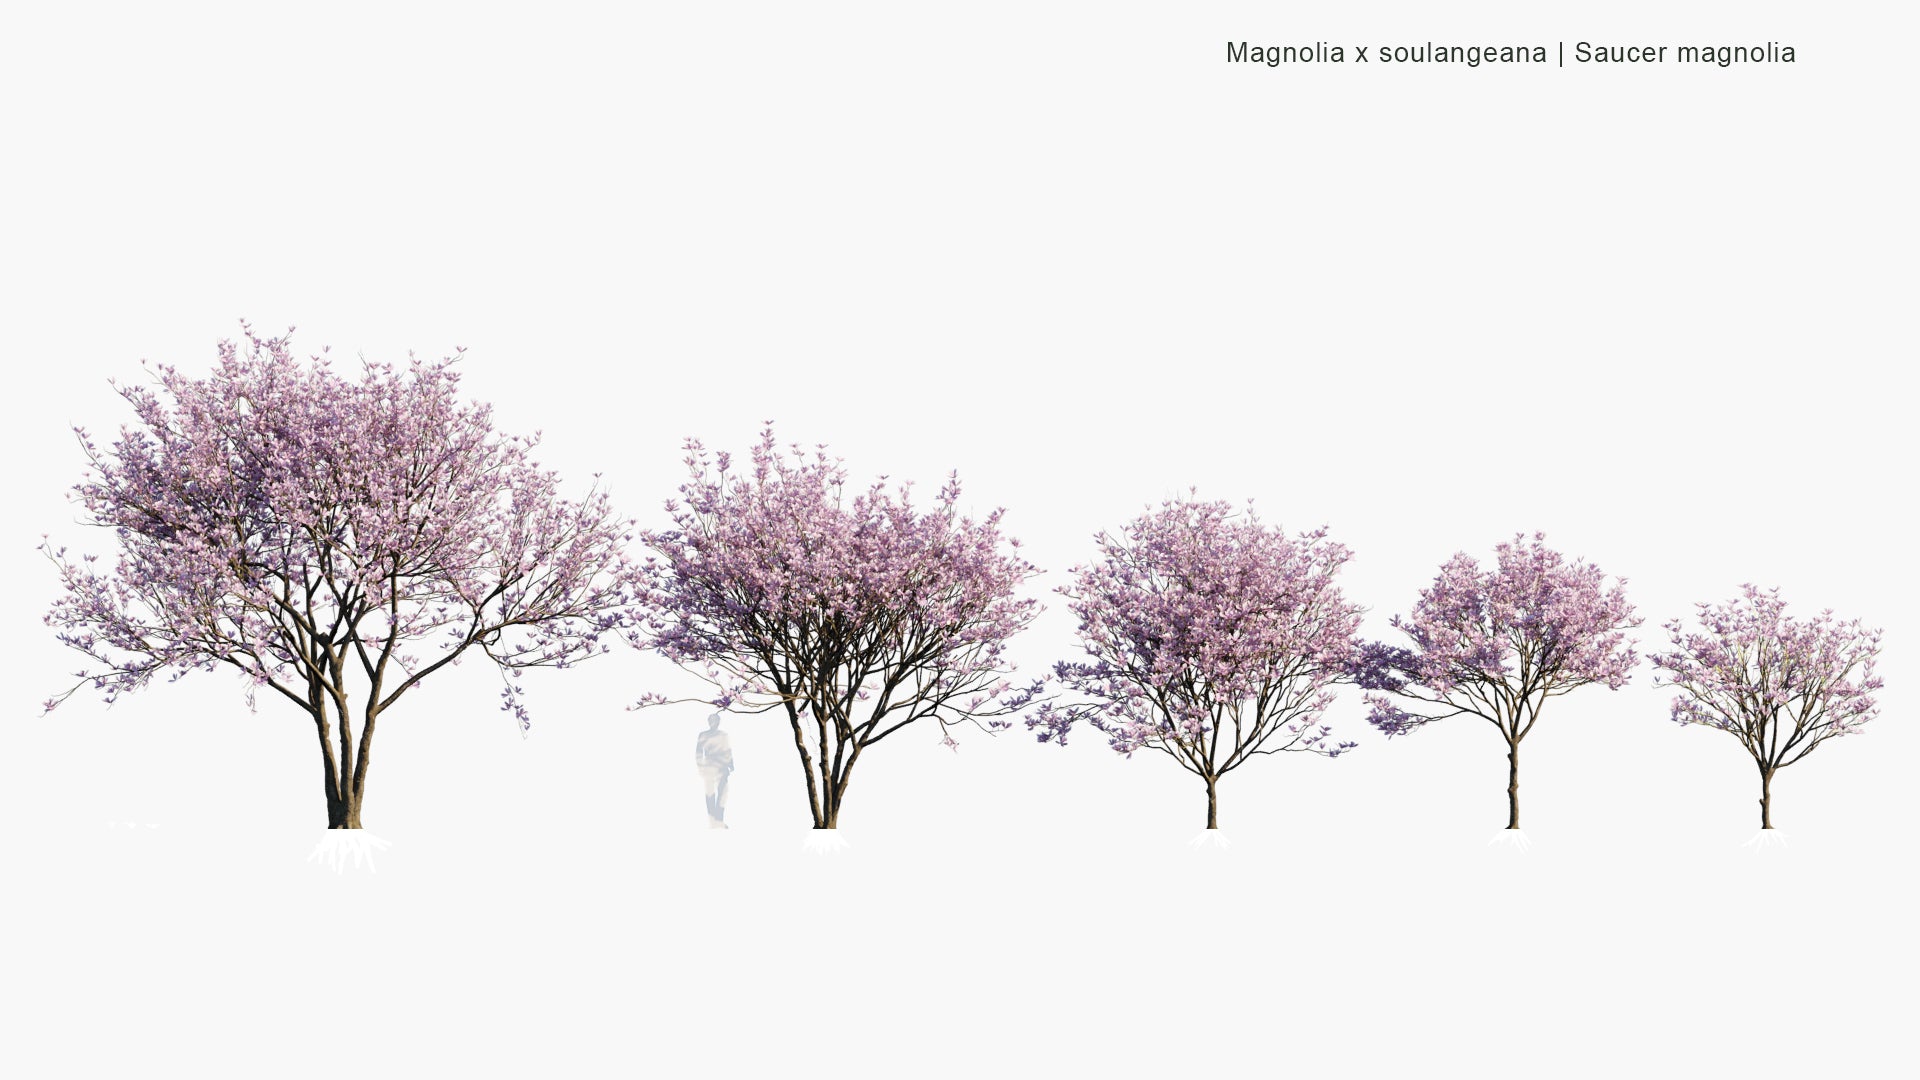 Low Poly Magnolia x Soulangeana - Saucer Magnolia, Tulip Tree (3D Model)